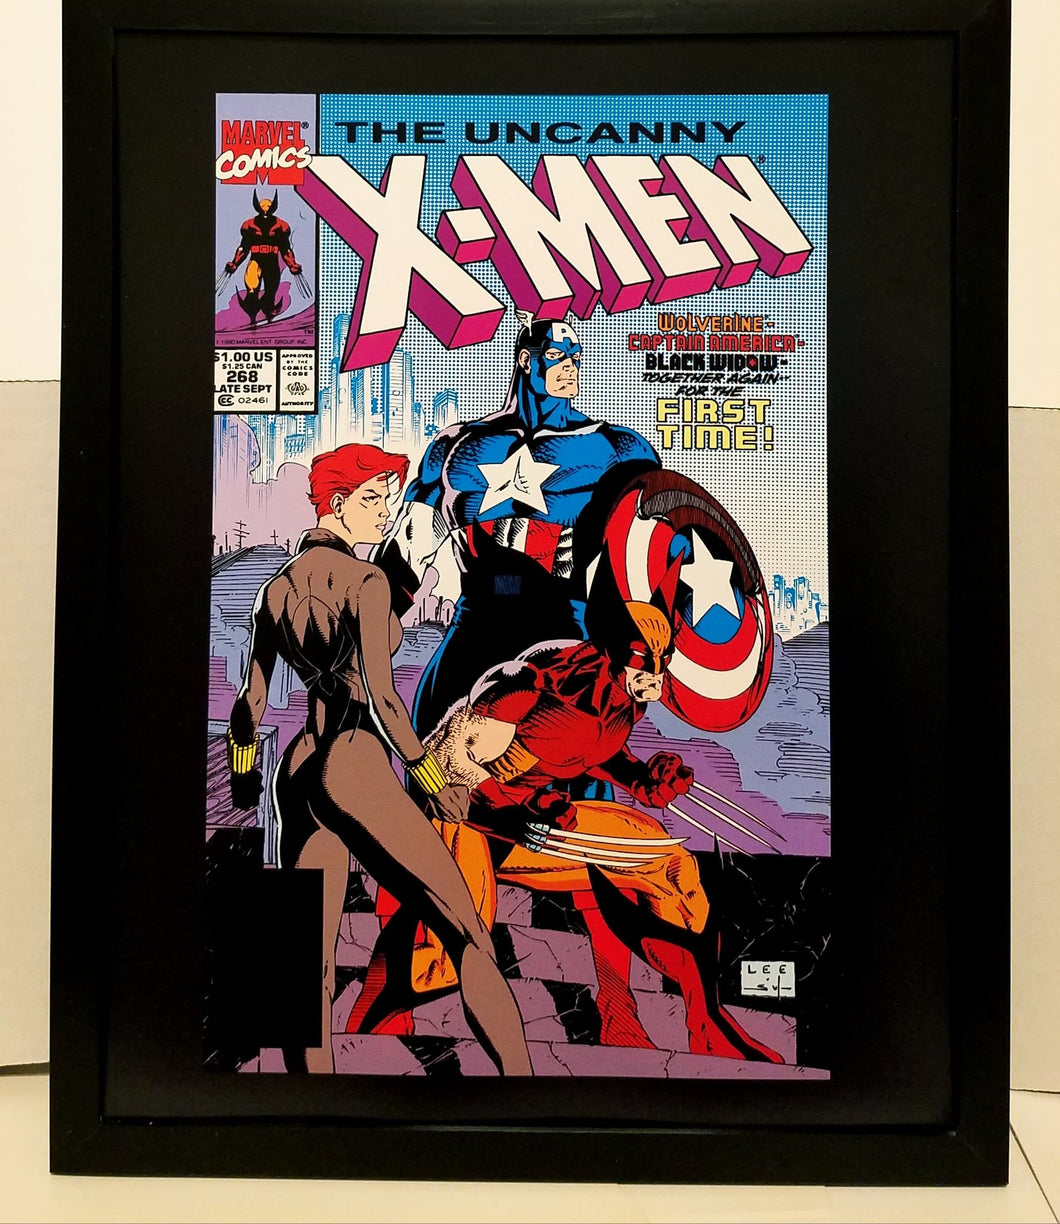 Uncanny X-Men #268 by Jim Lee 11x14 FRAMED Marvel Comics Art Print Poster